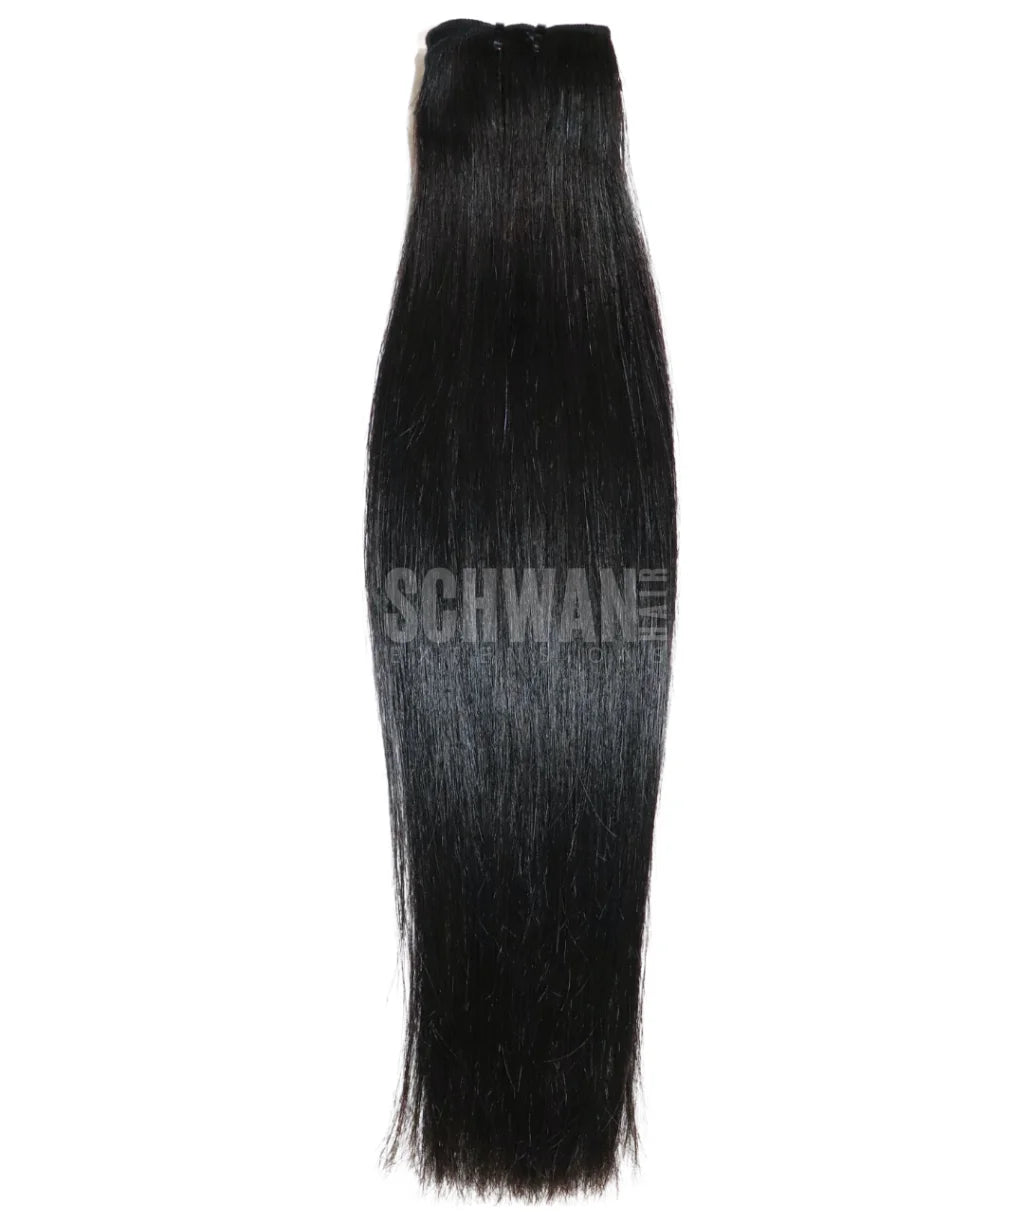 Raw Vietnamese Straight Double Drawn - Schwan Hair Luxury raw hair extensions London